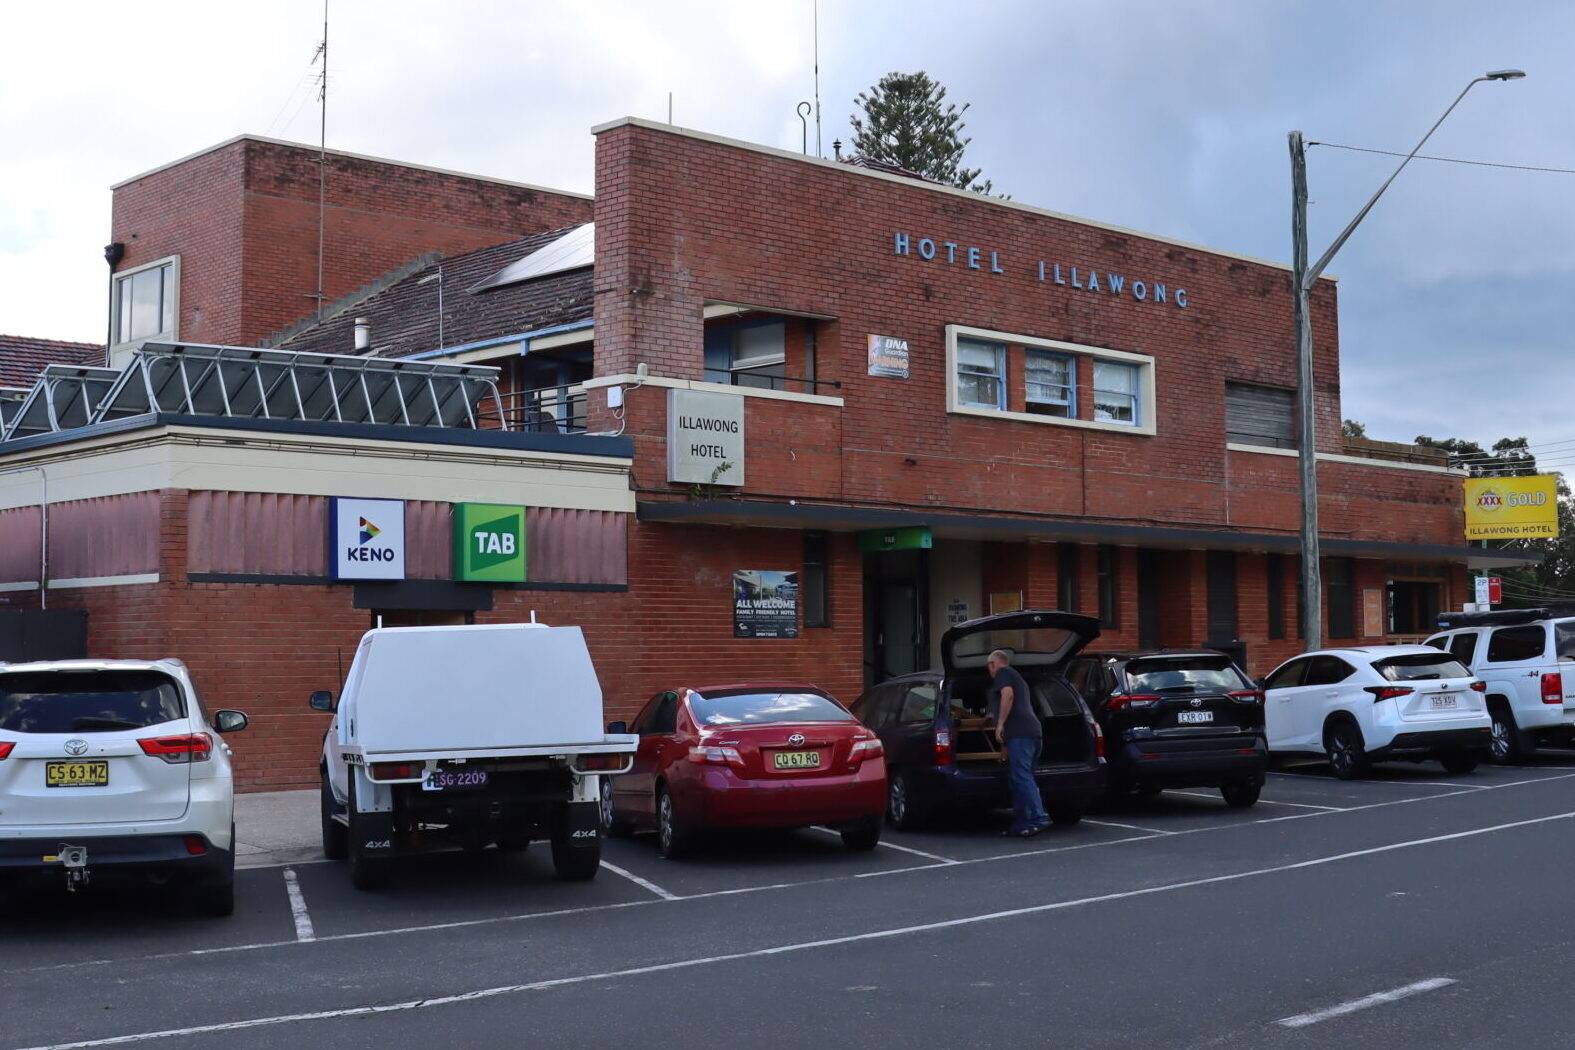 Hotel Illawong, Evans Head, NSW, Australia 